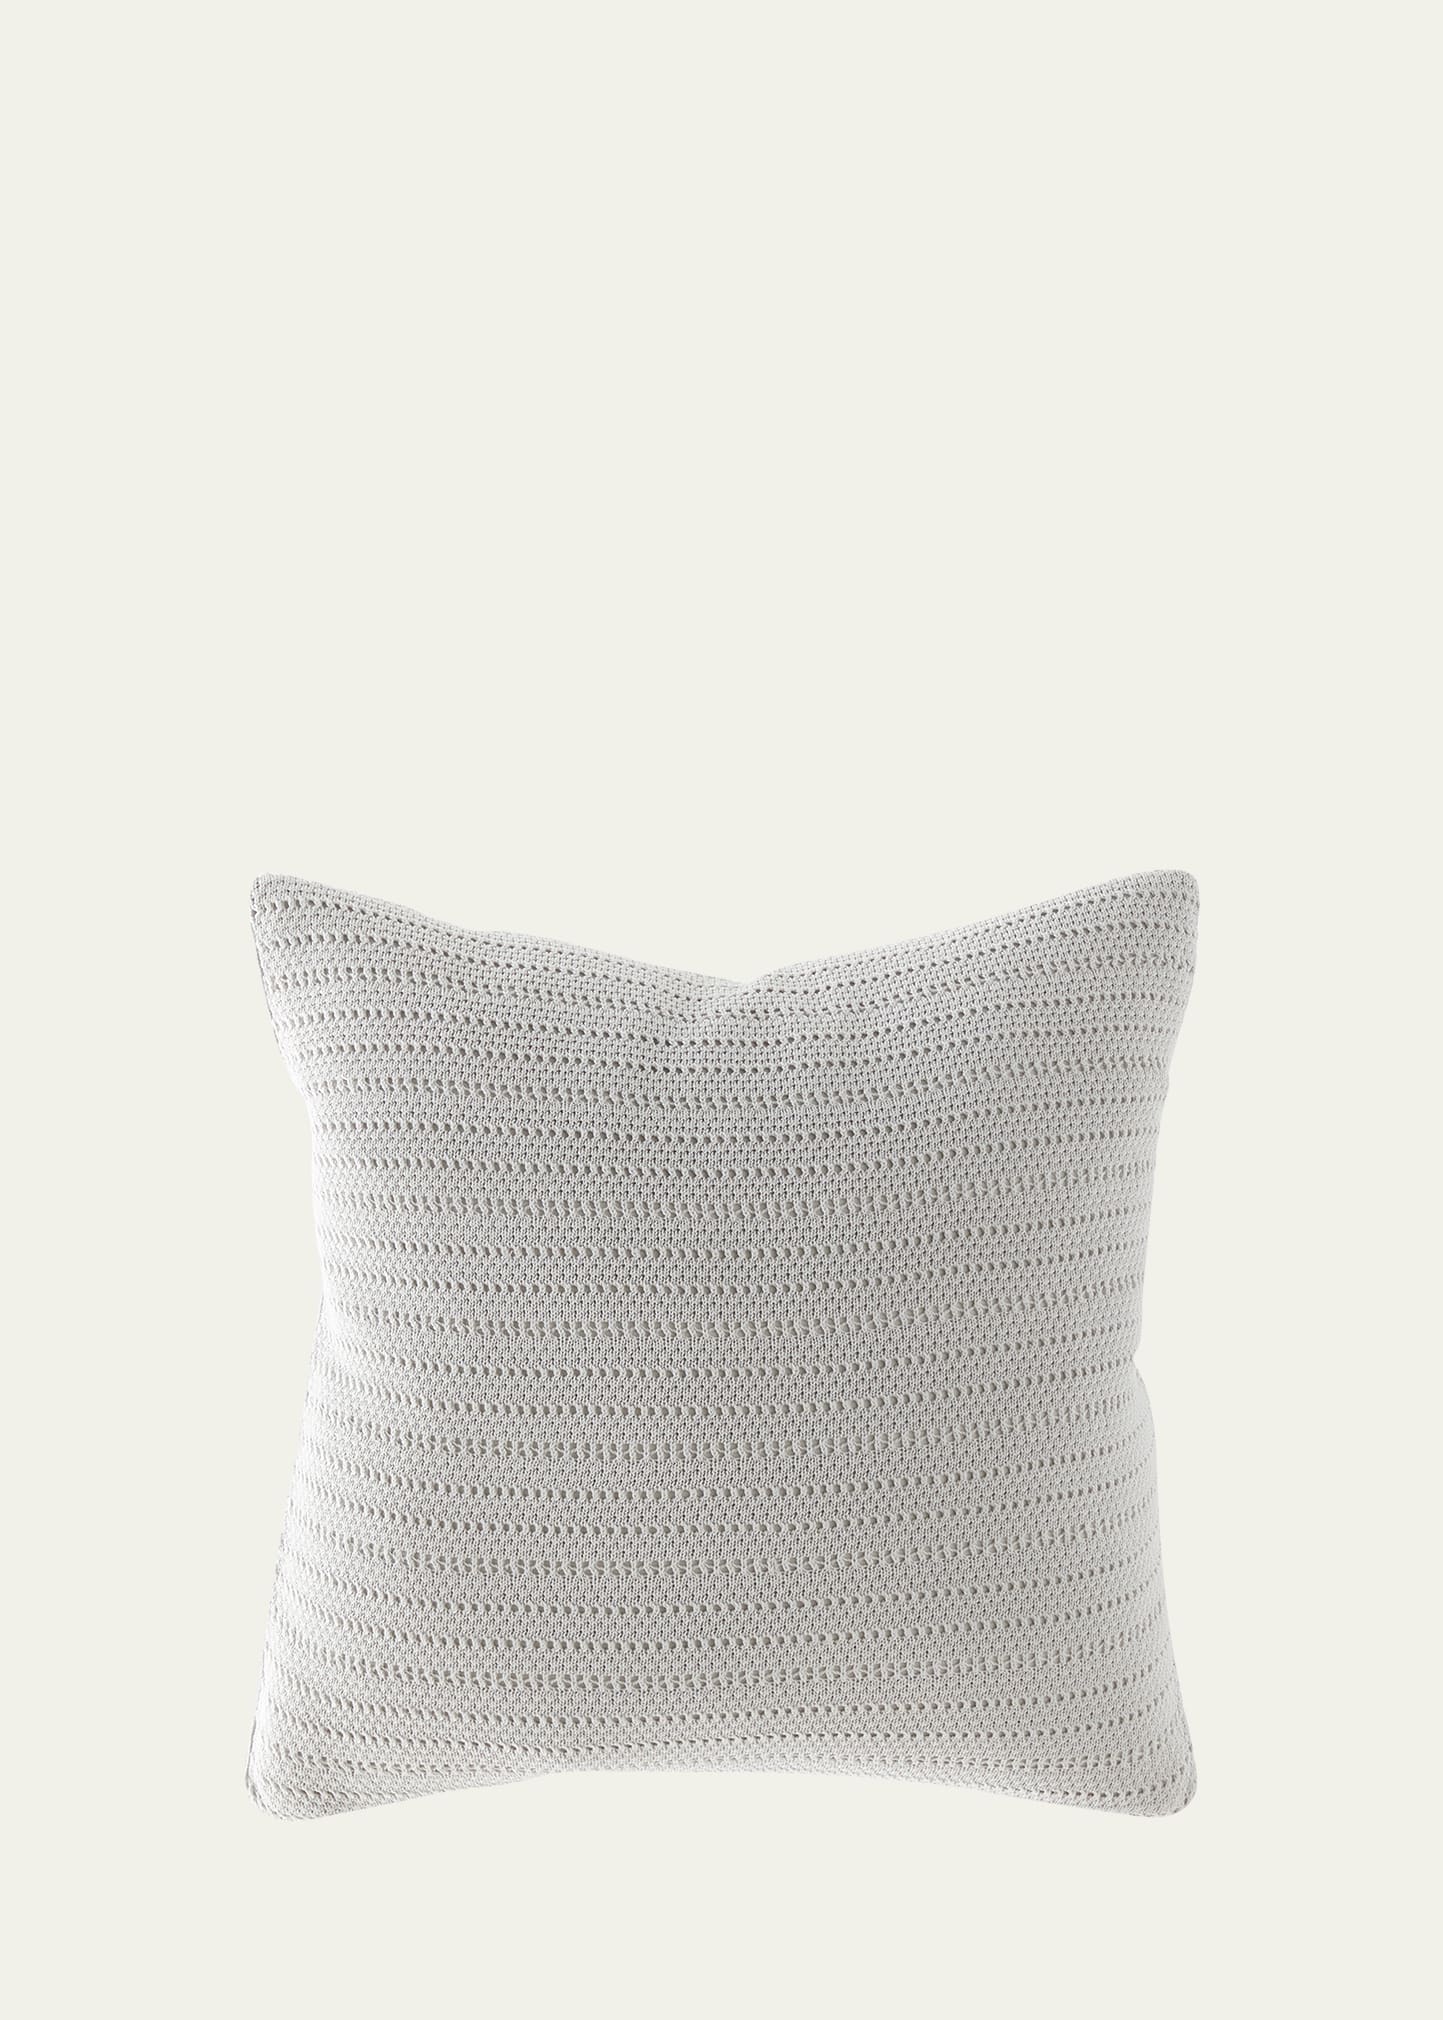 Selden 20" Decorative Pillow